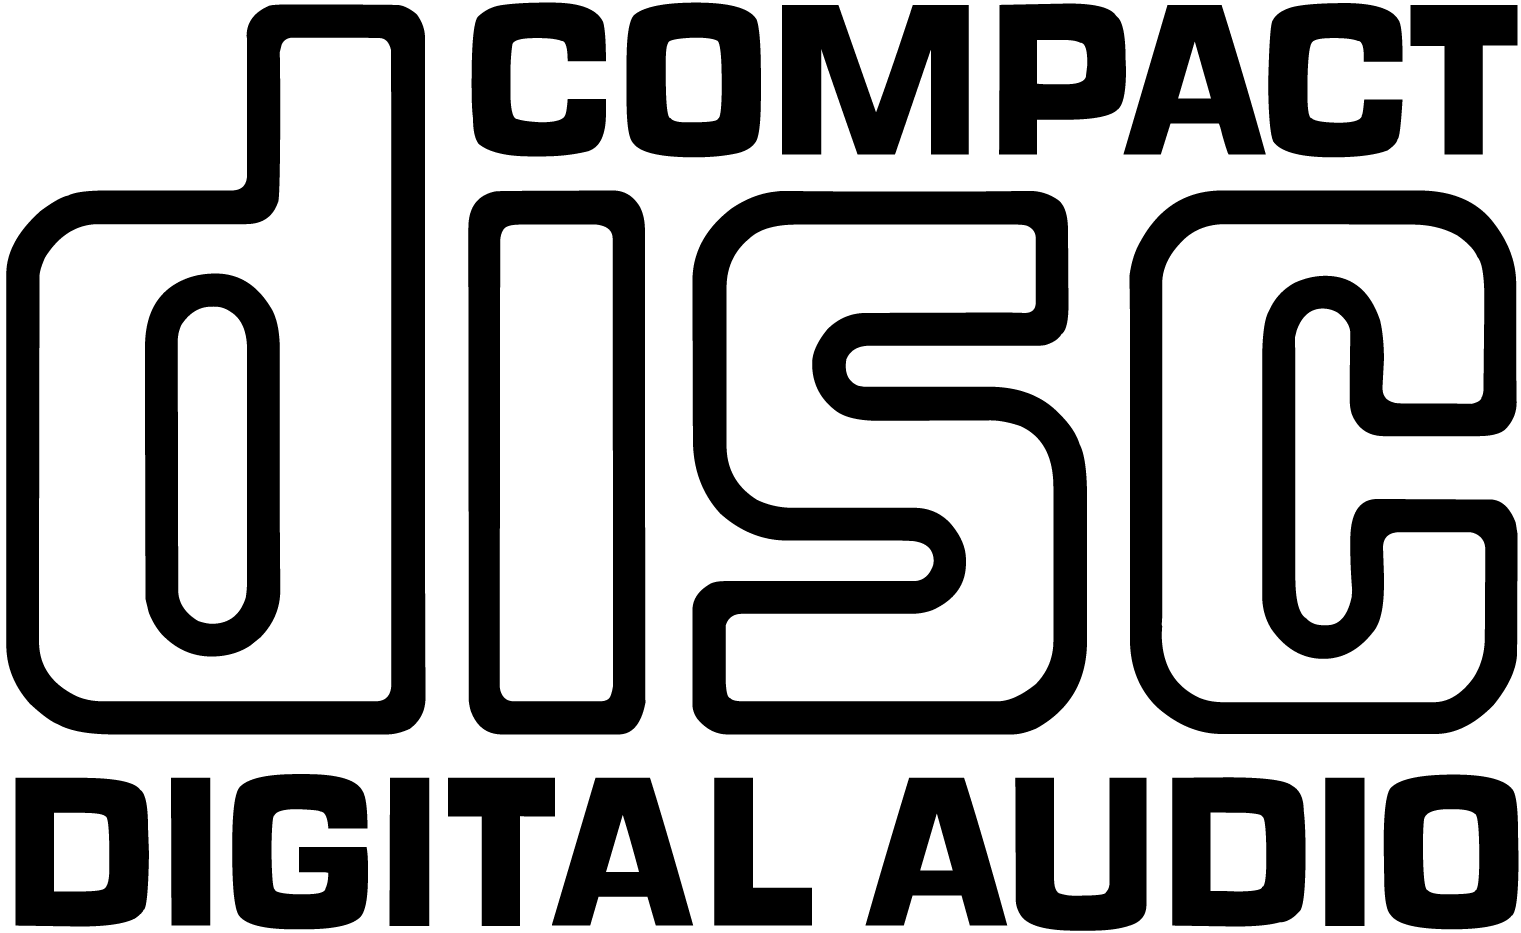 Compact Disc Logo - File:CD-AUDIO logo.png - Wikimedia Commons